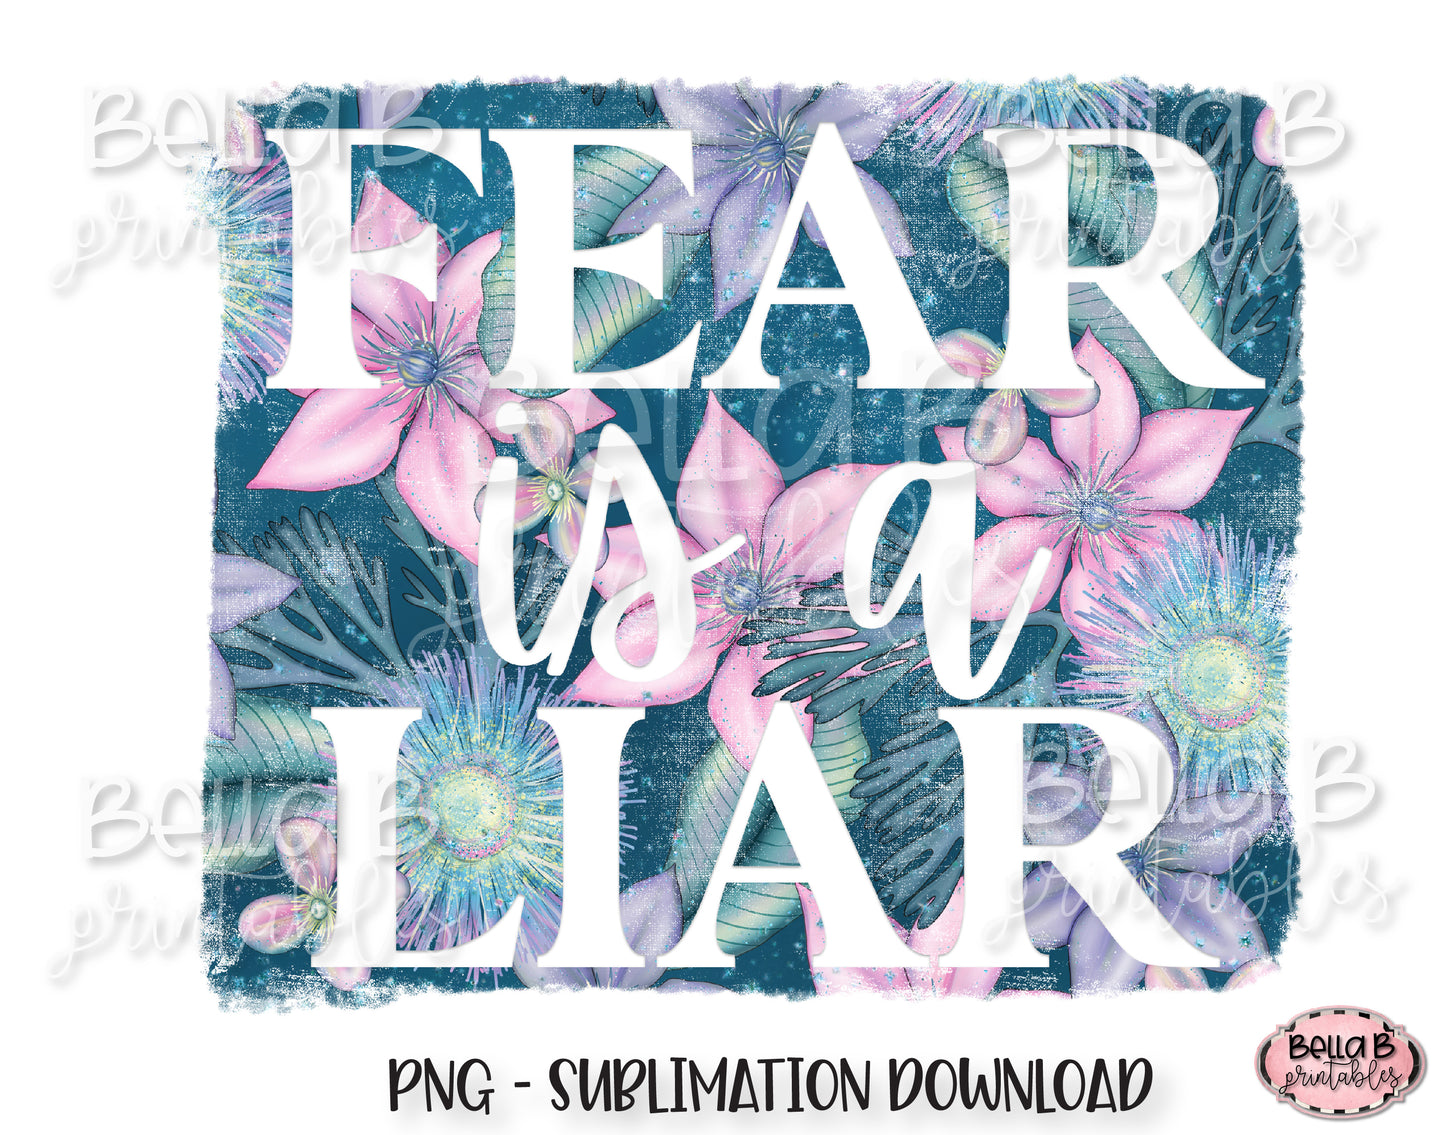 Fear Is a Liar Sublimation Design, Christian Design